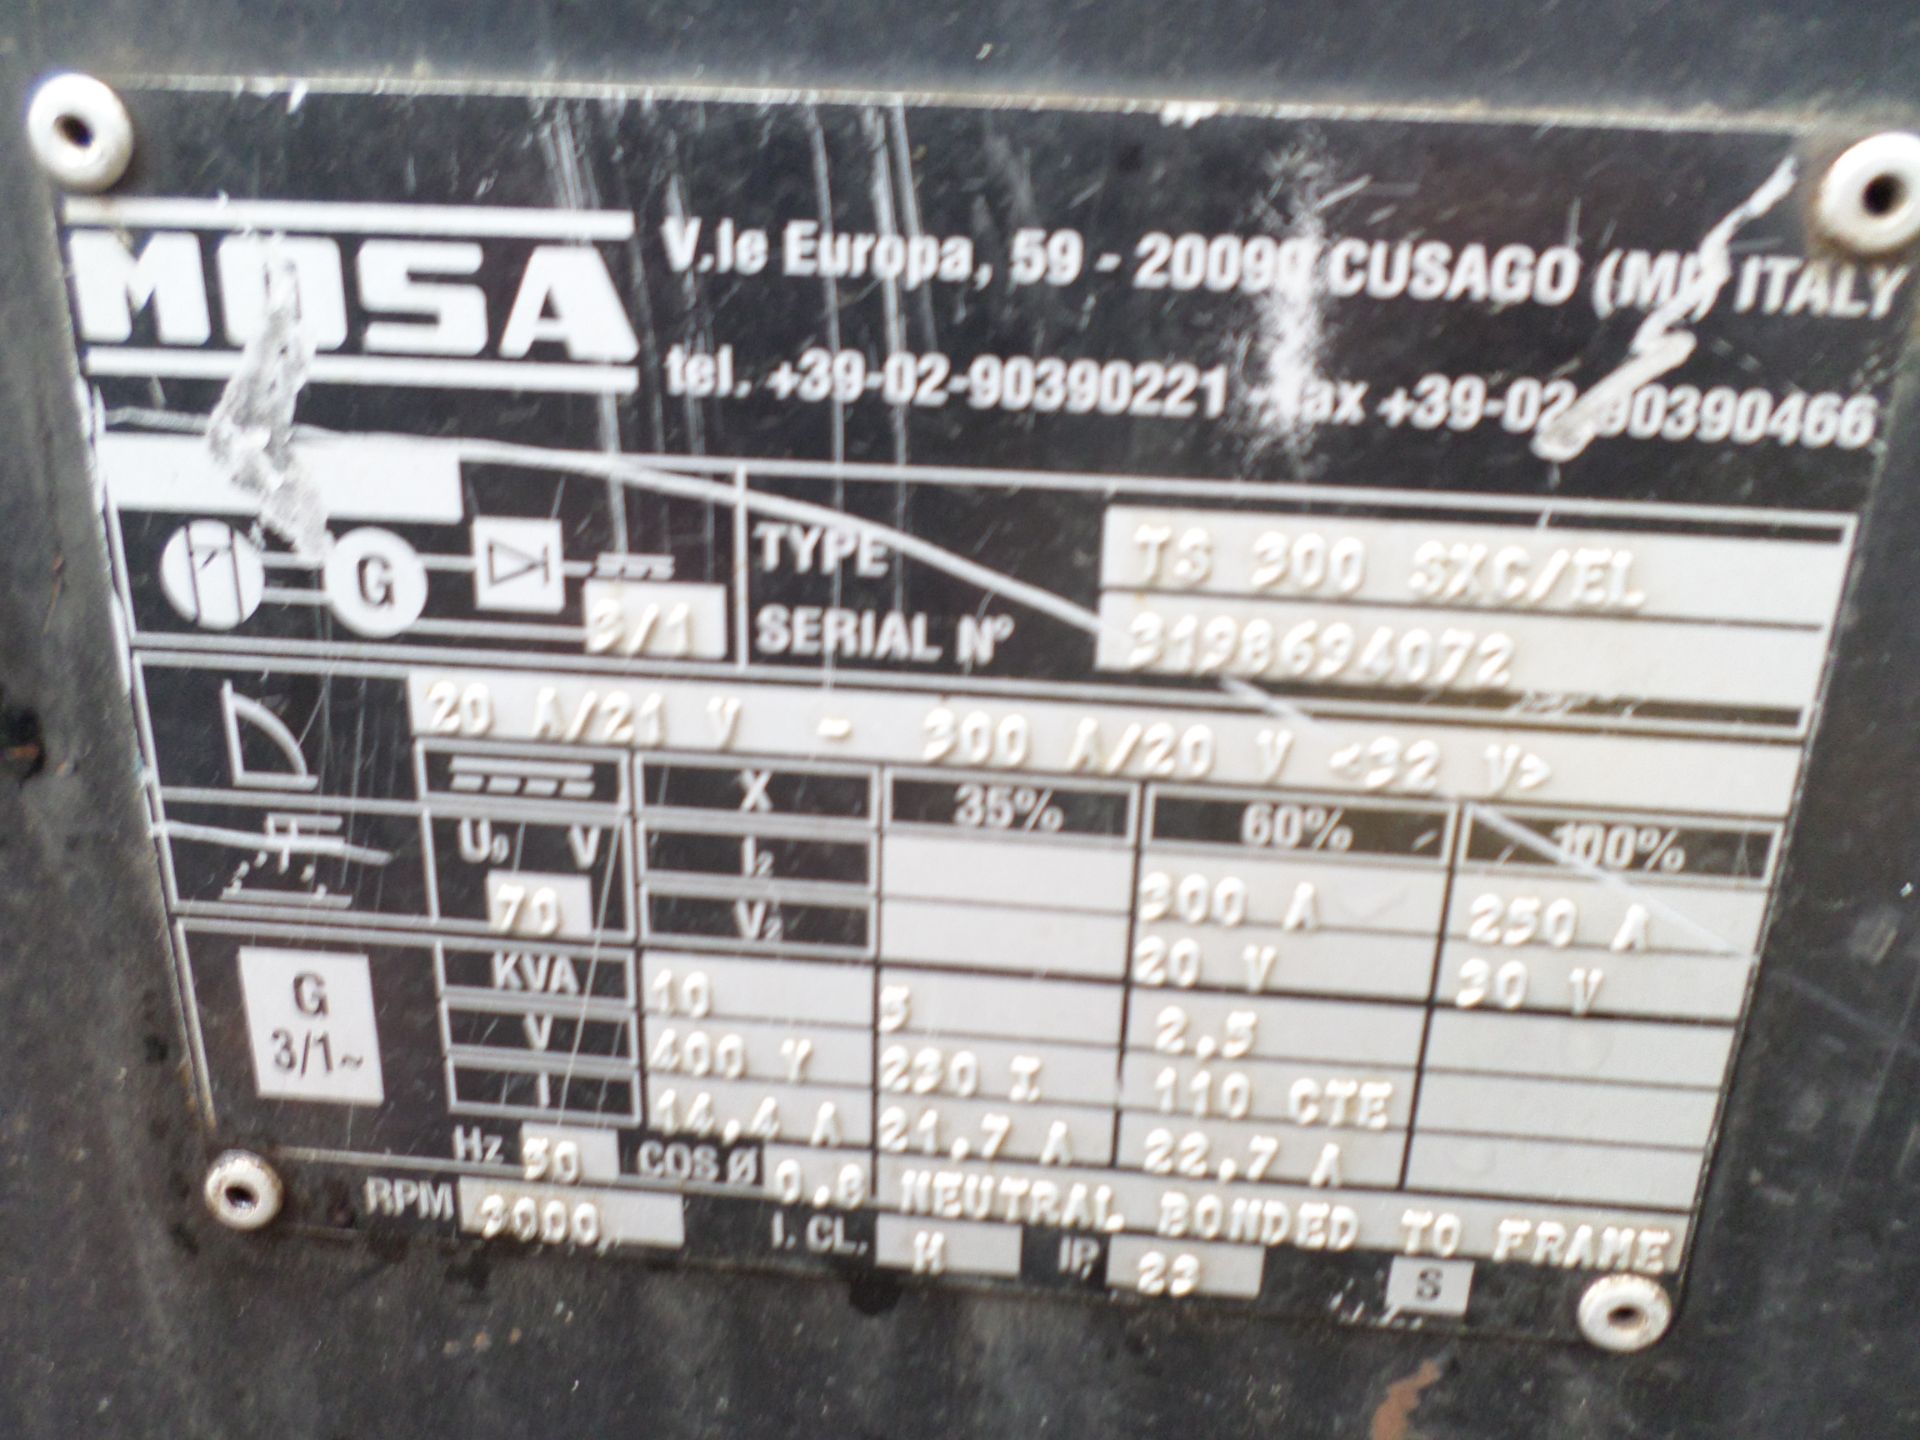 Mosa TS300 welder generator, good engine, no power output NO VAT - Image 2 of 3